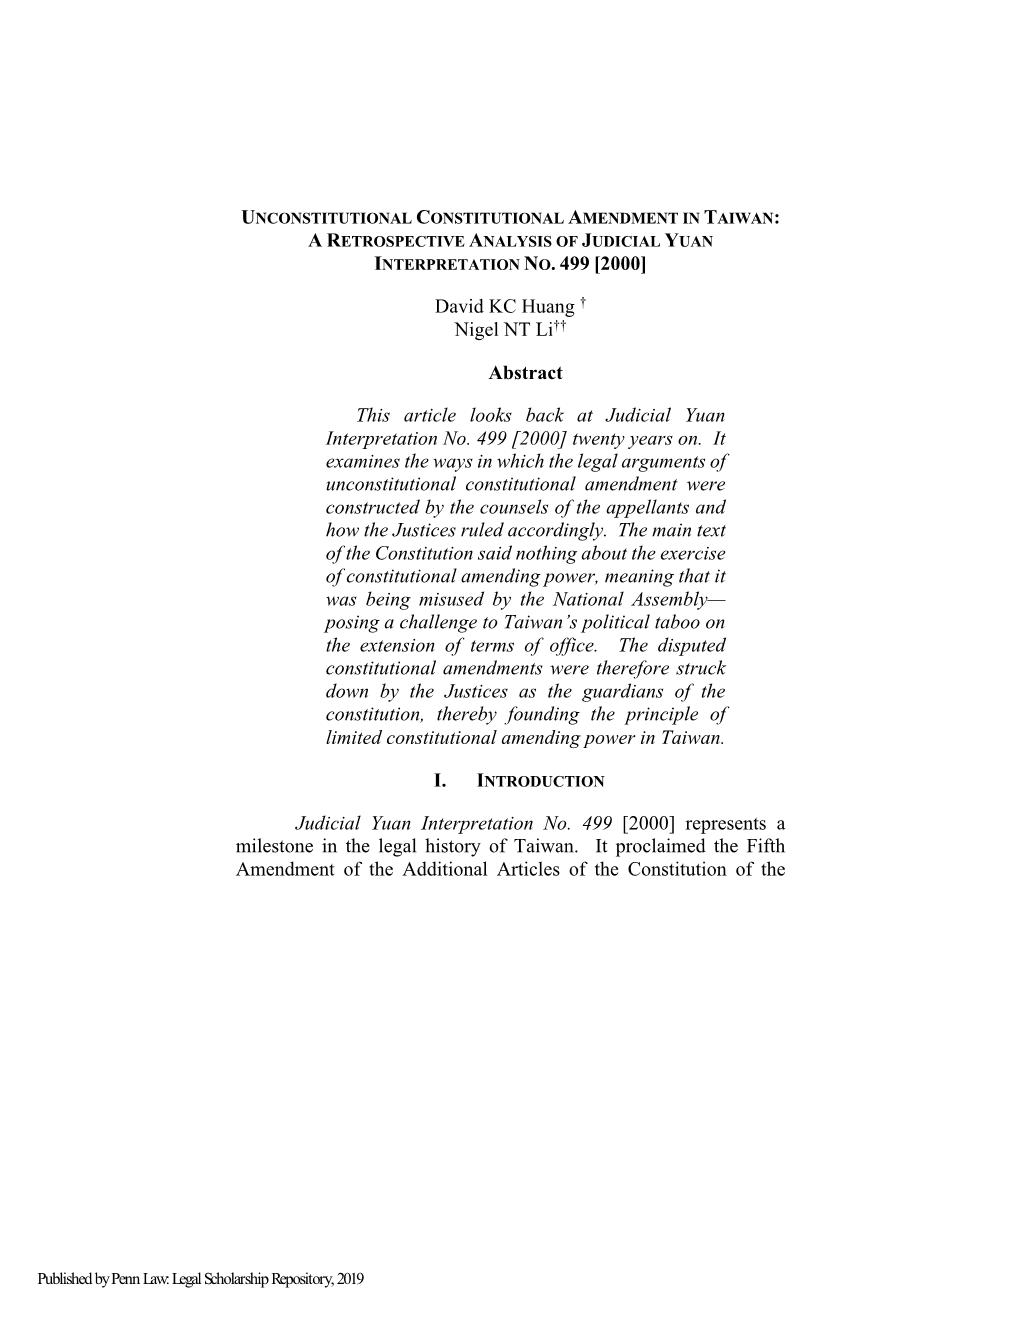 A Retrospective Analysis of Judicial Yuan Interpretation No. 499 [2000]